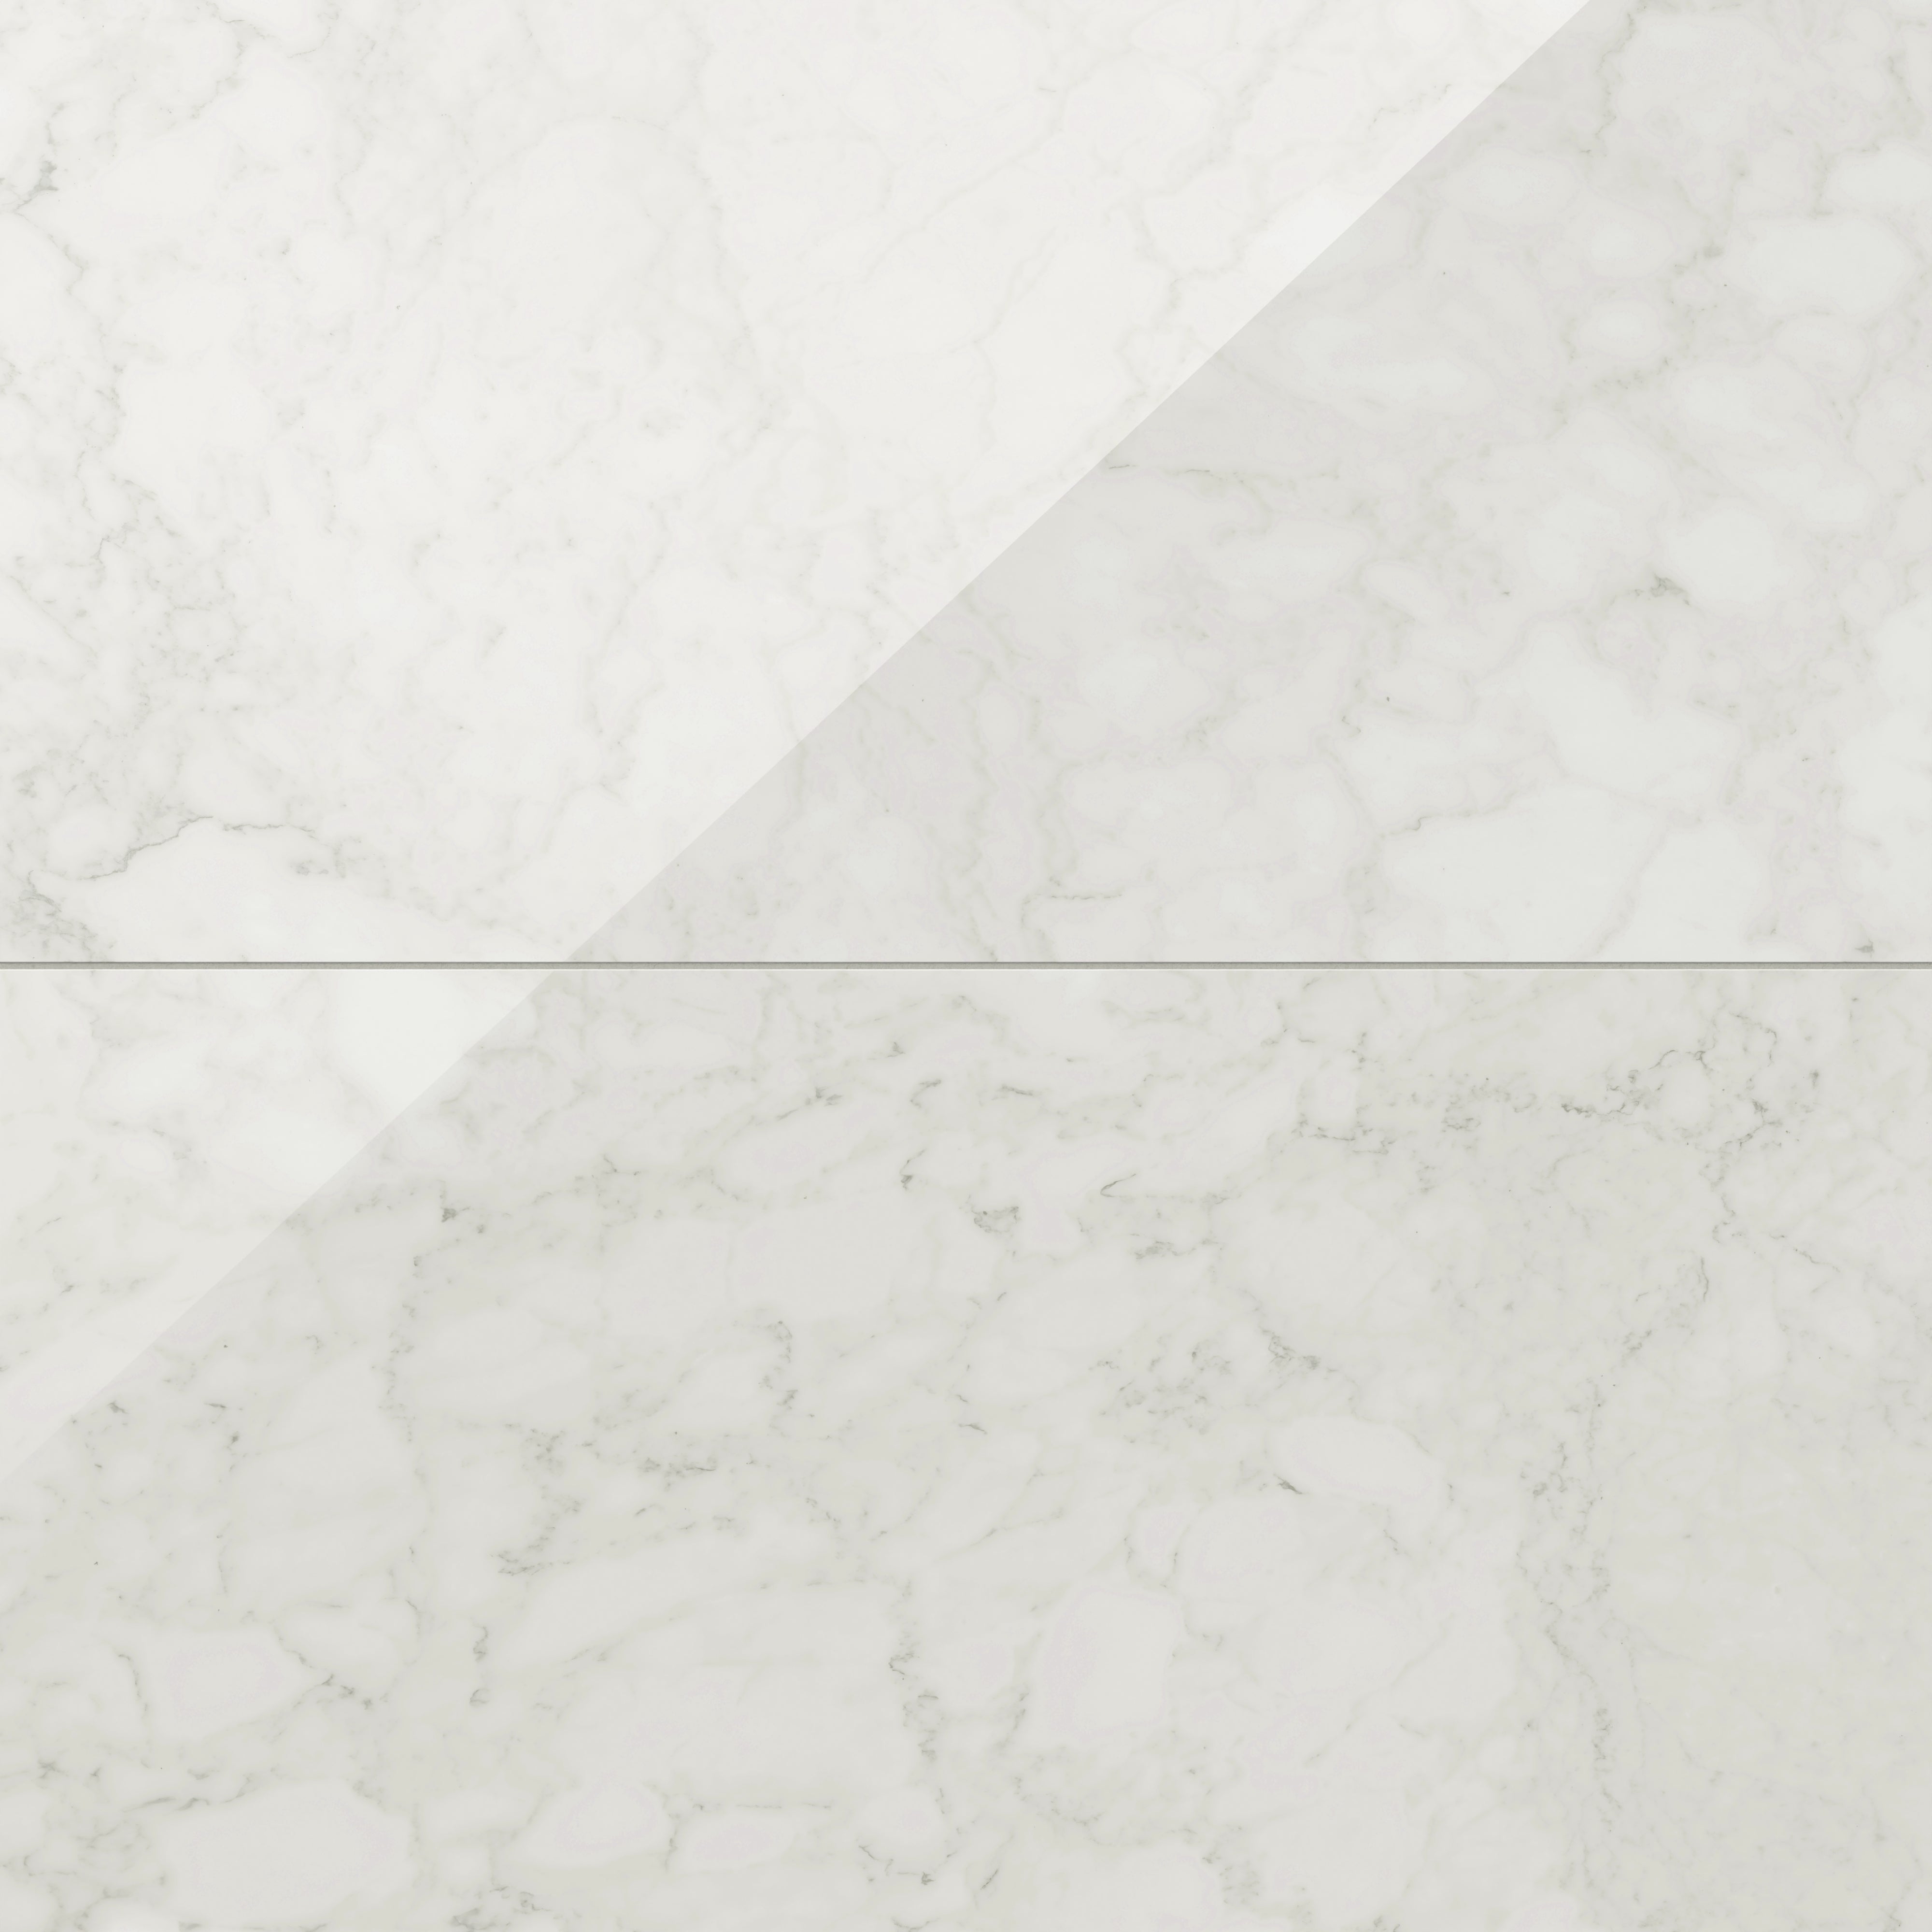 Aniston 24x48 Polished Porcelain Tile in Carrara Bianco